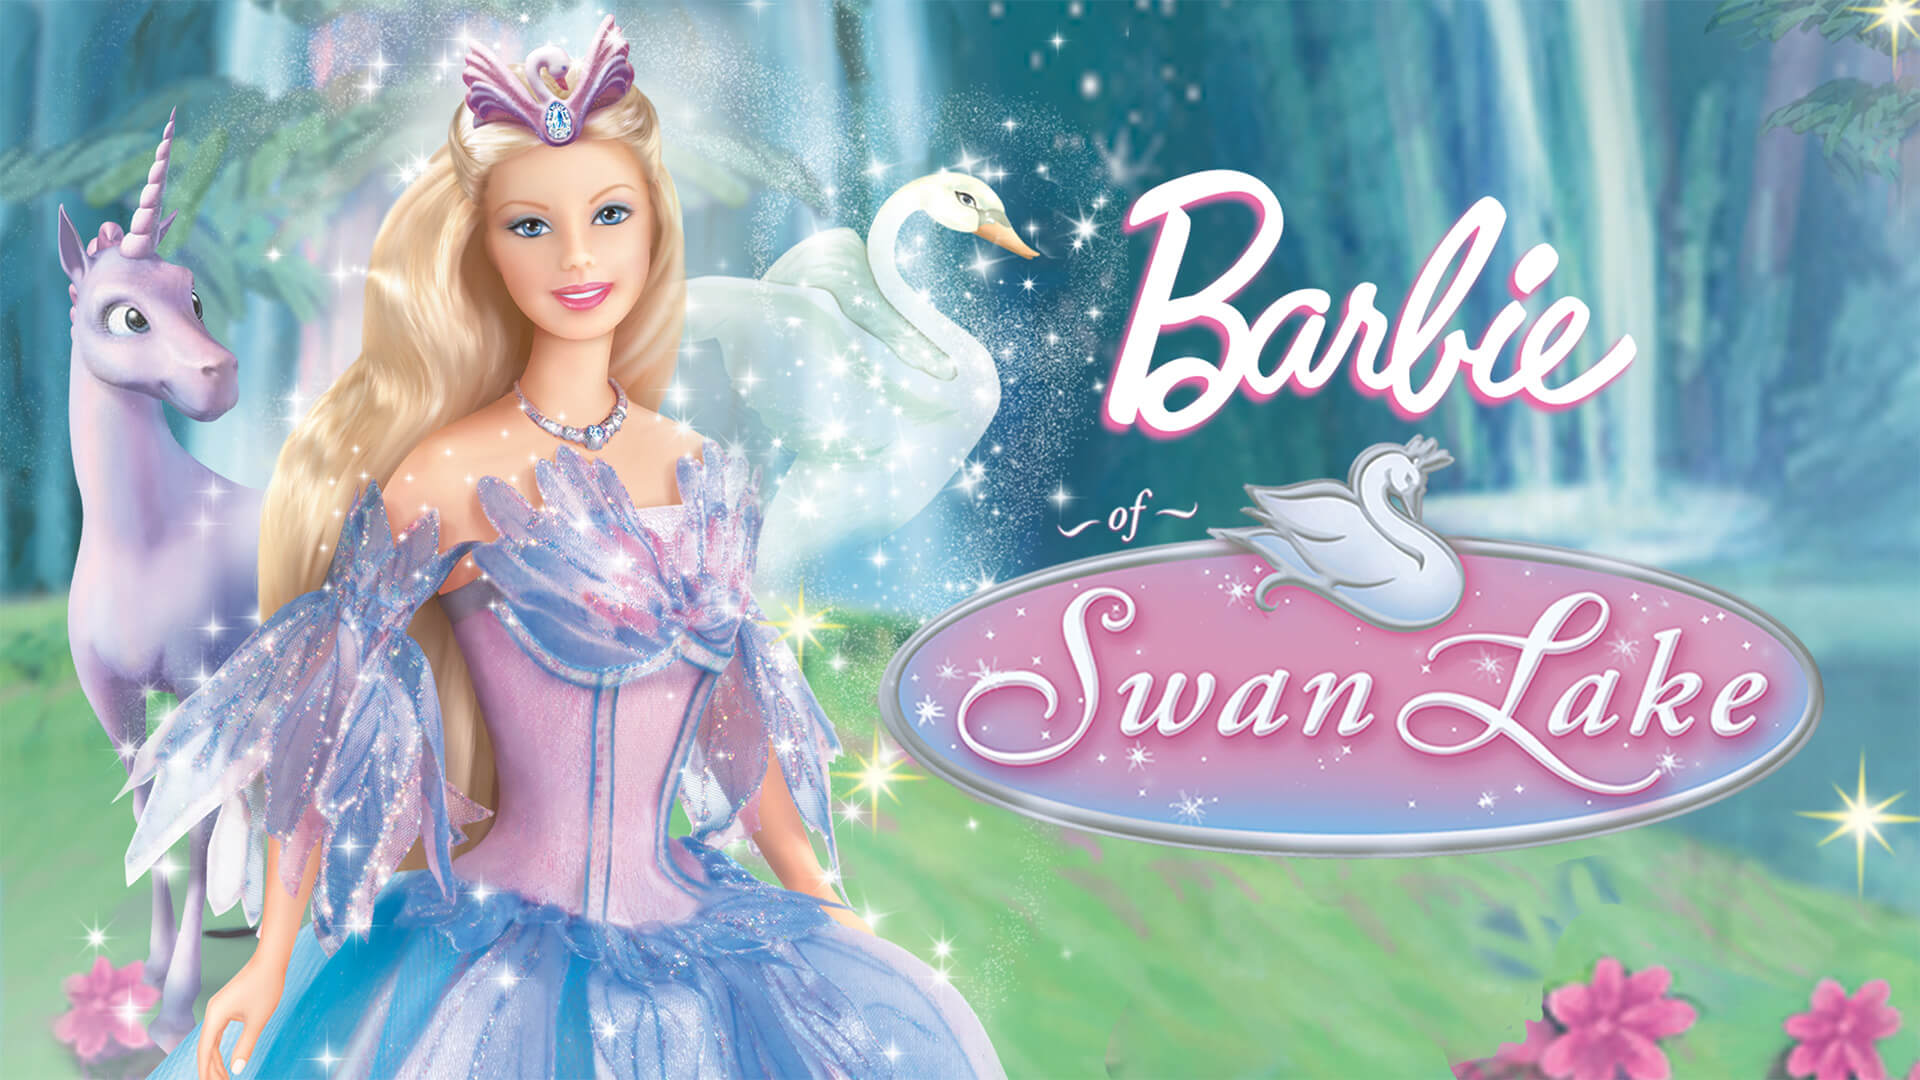 Barbie Swan Lake